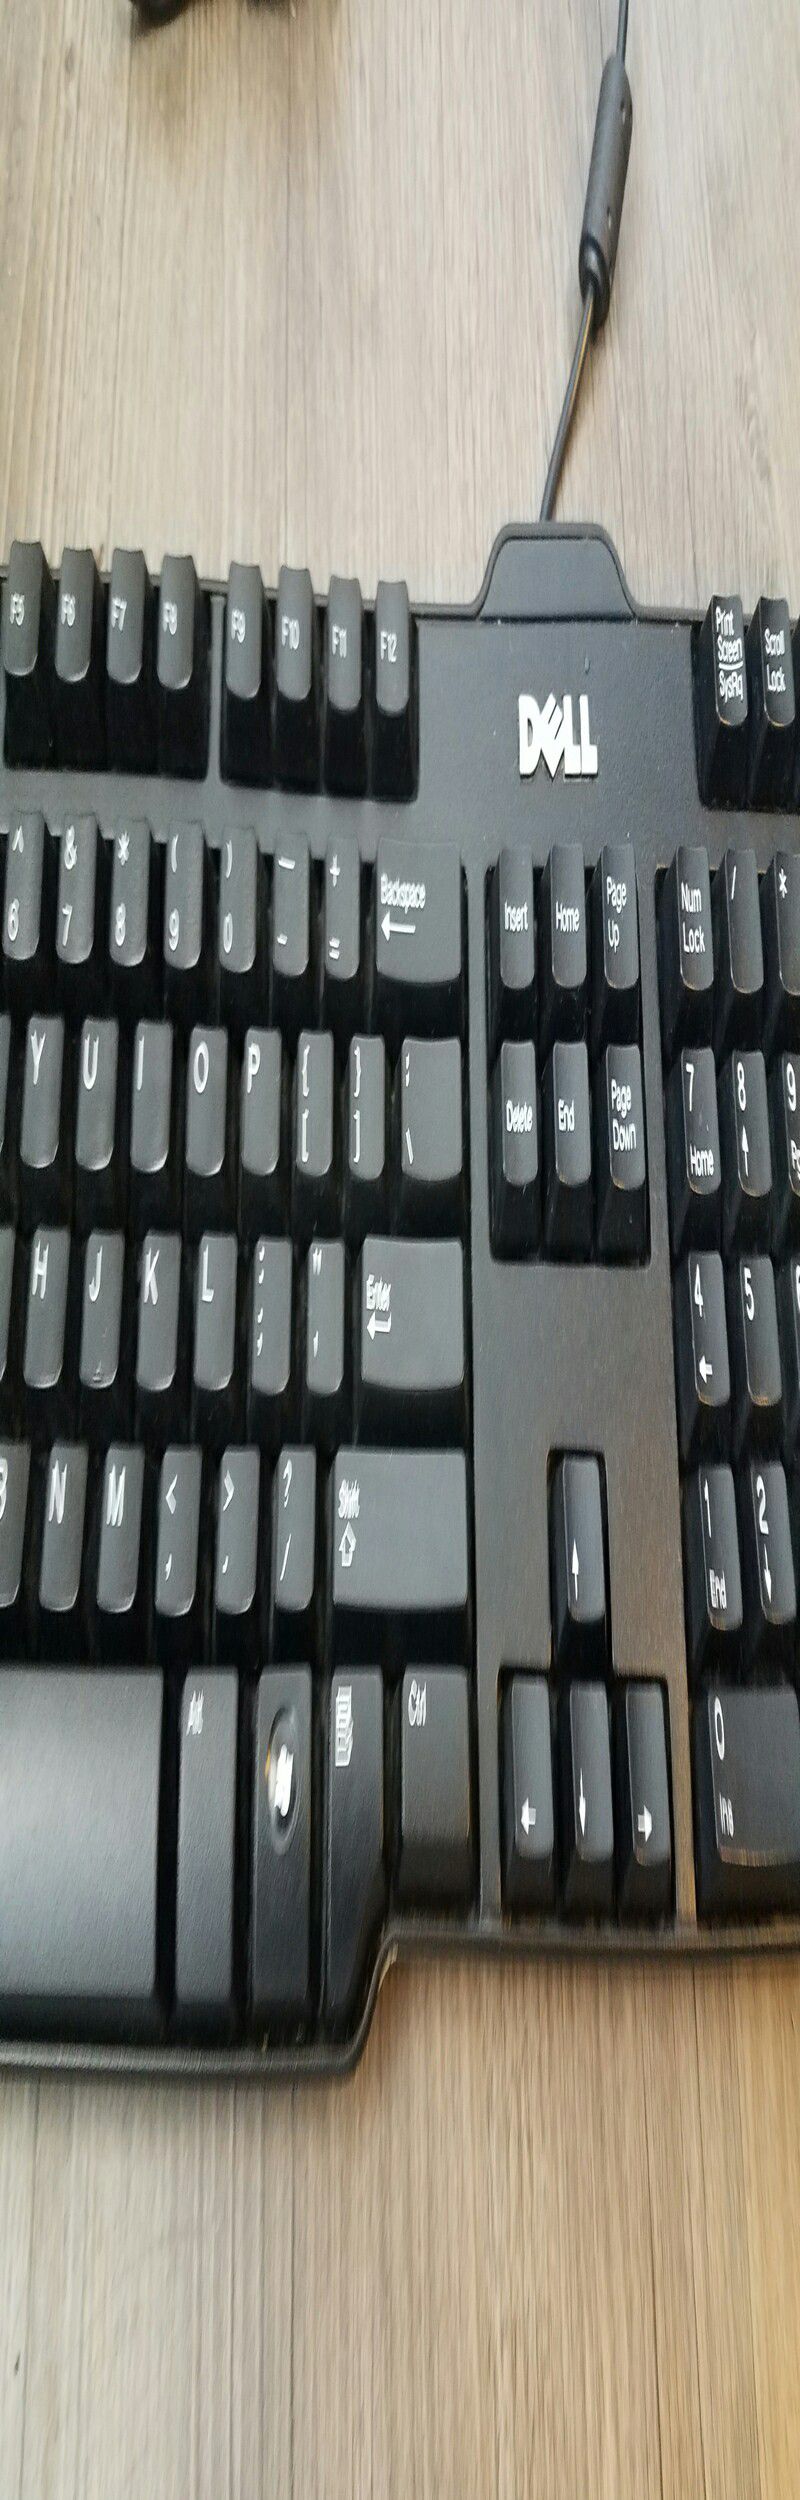 Dell Keyboard, Black, SK-8115 Dell Wired USB QWERTY Keyboard, Black, SK-8115